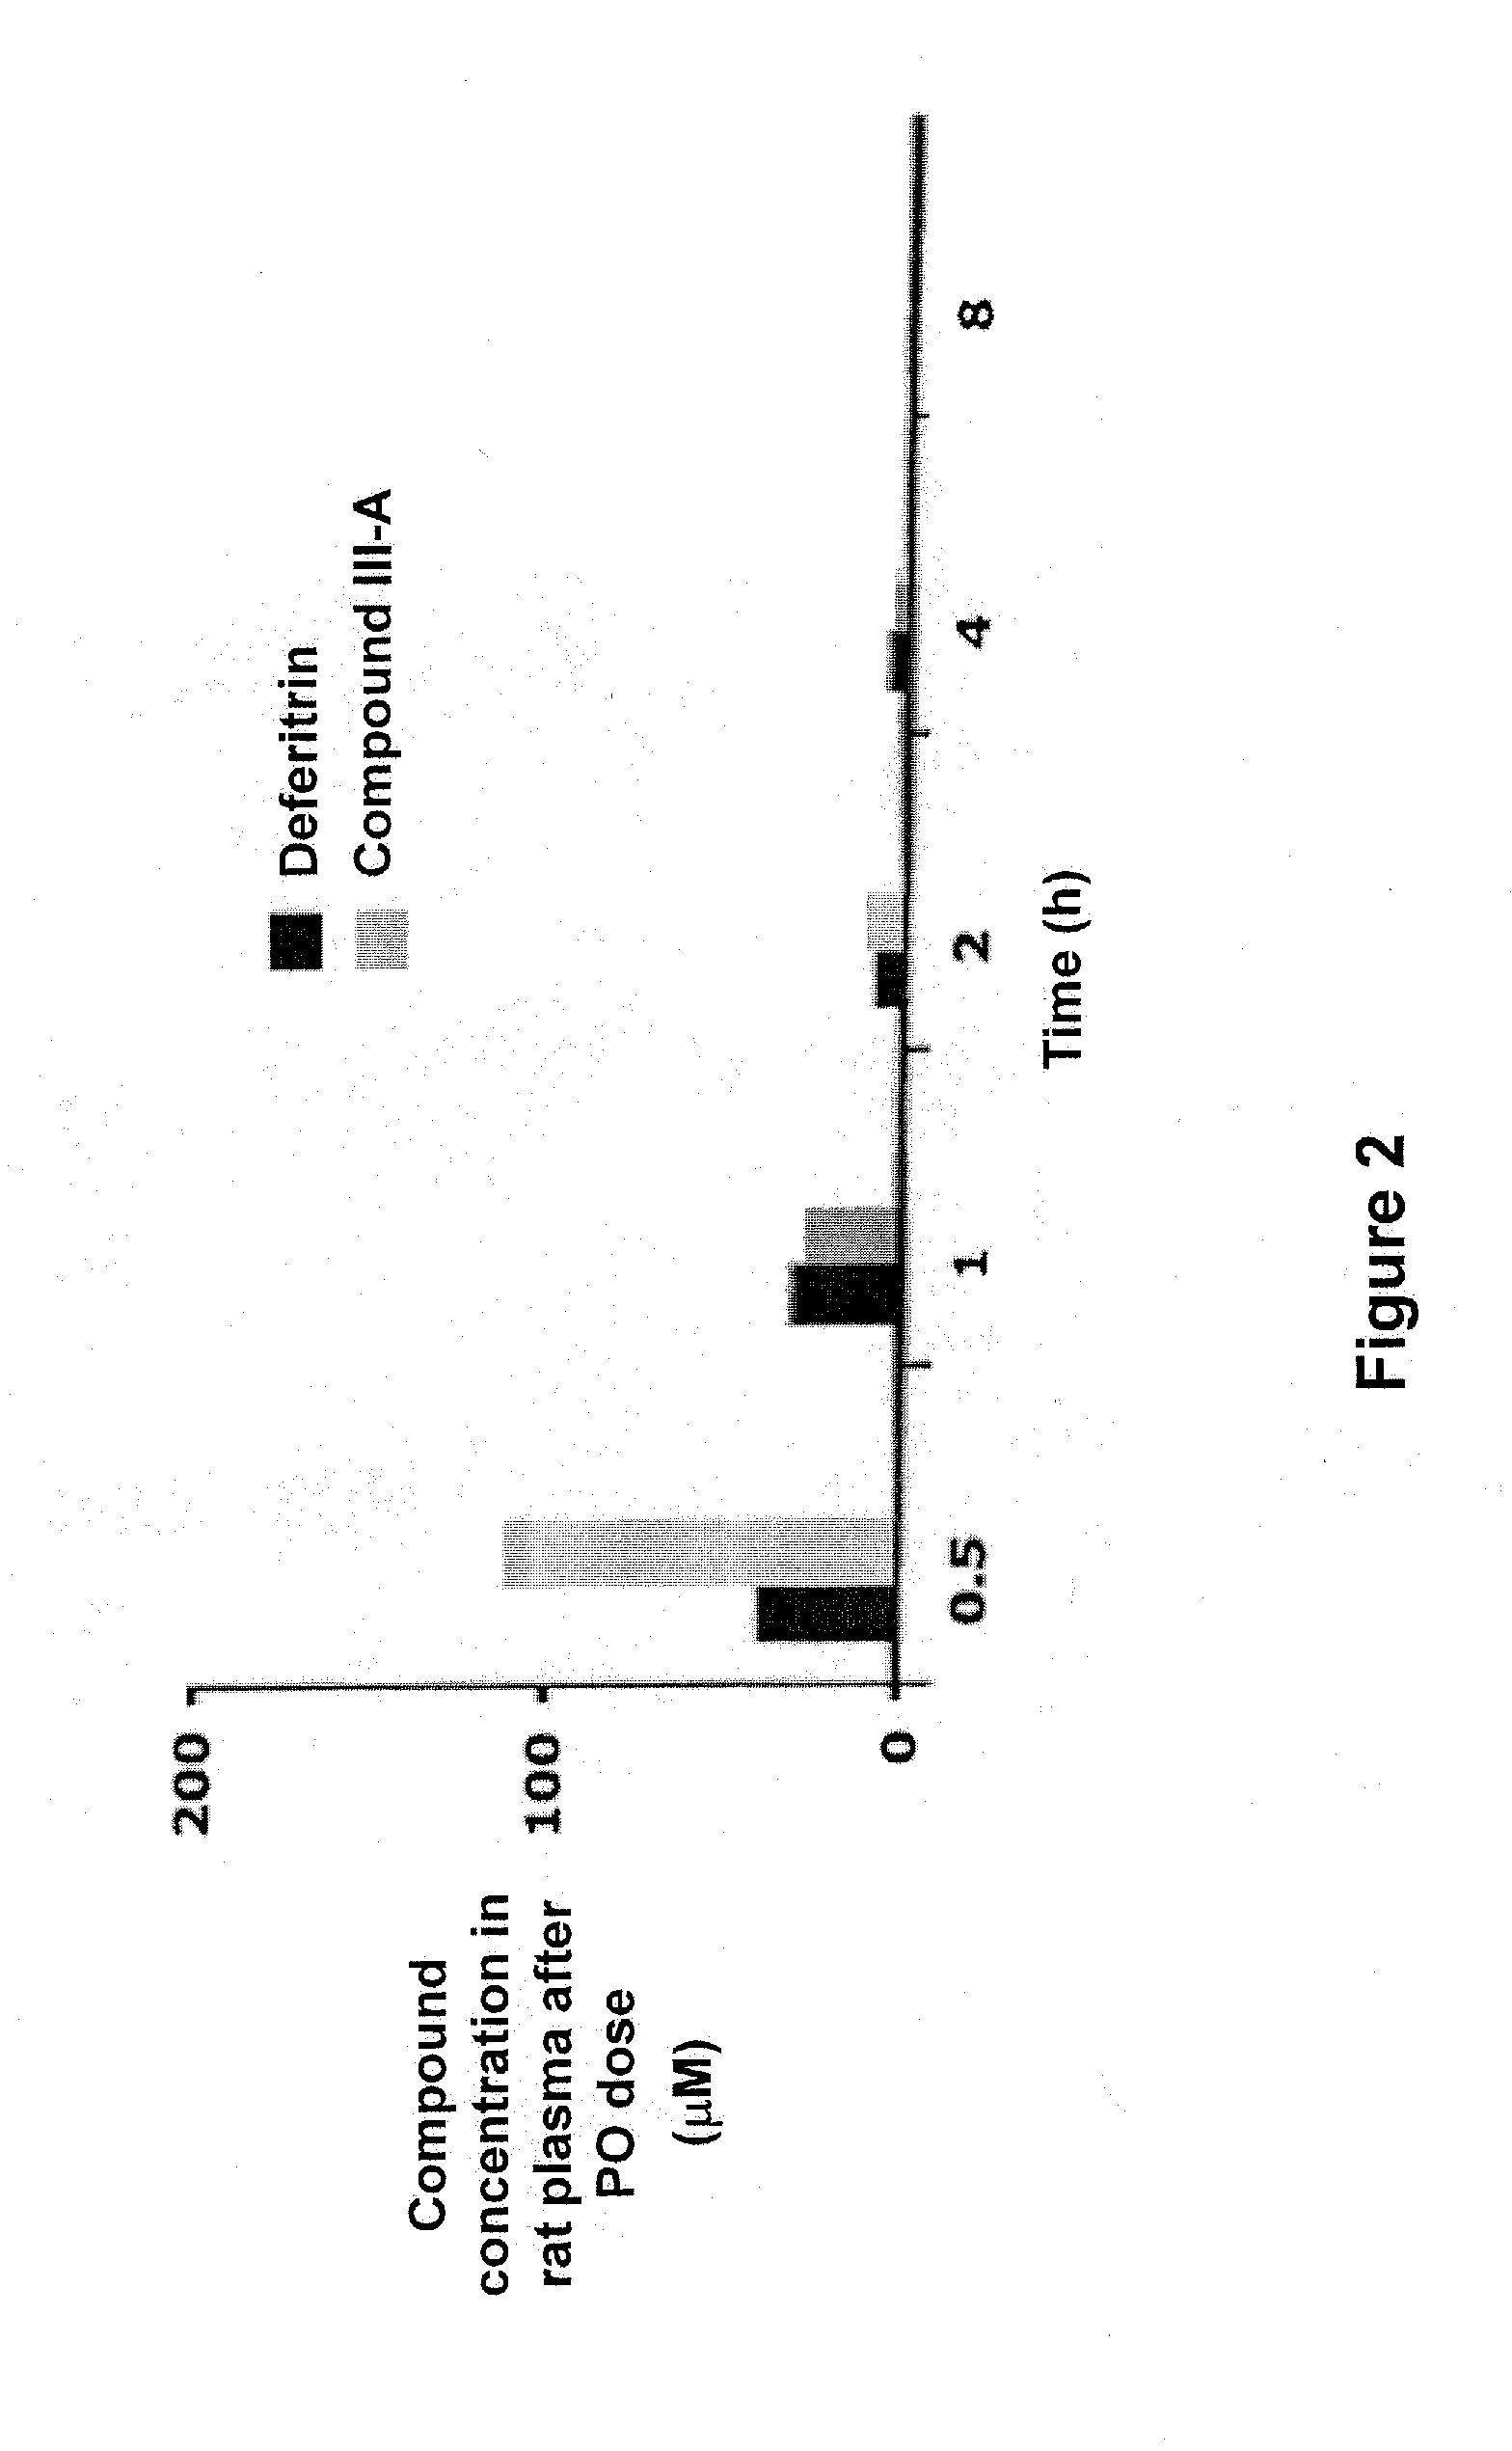 Uses of 3'-desferrithiocin analogs